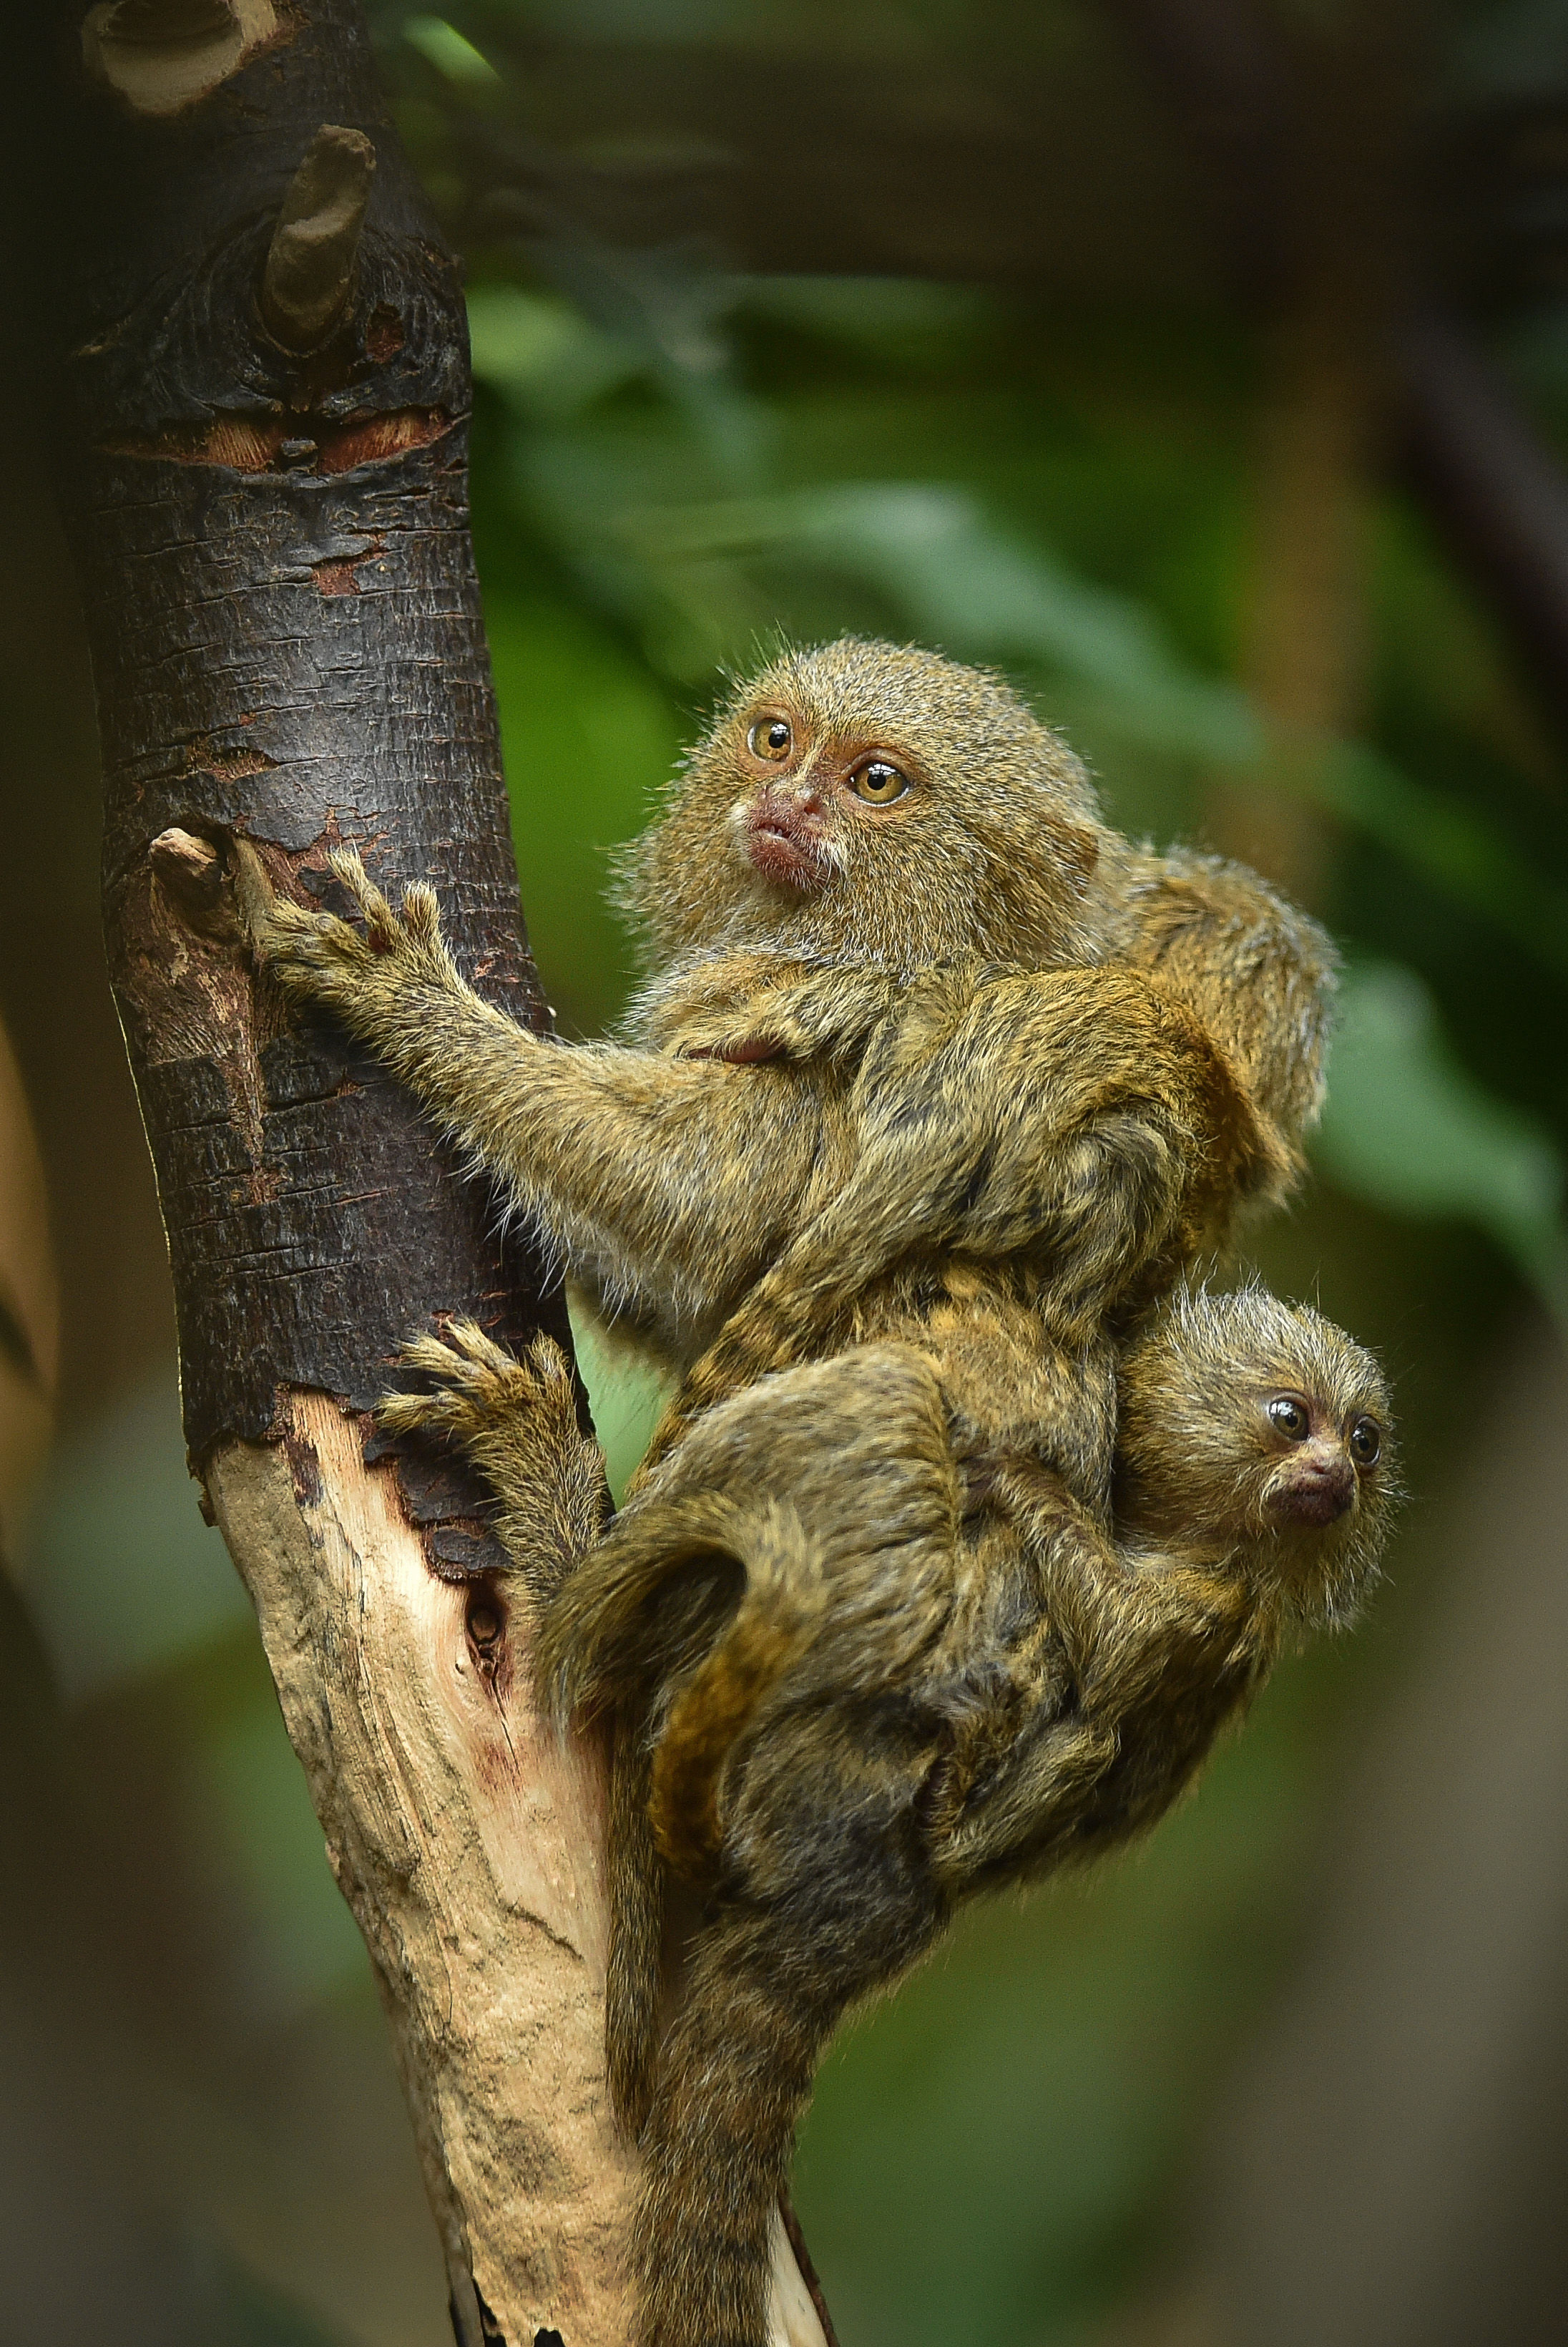 The pygmy marmosets